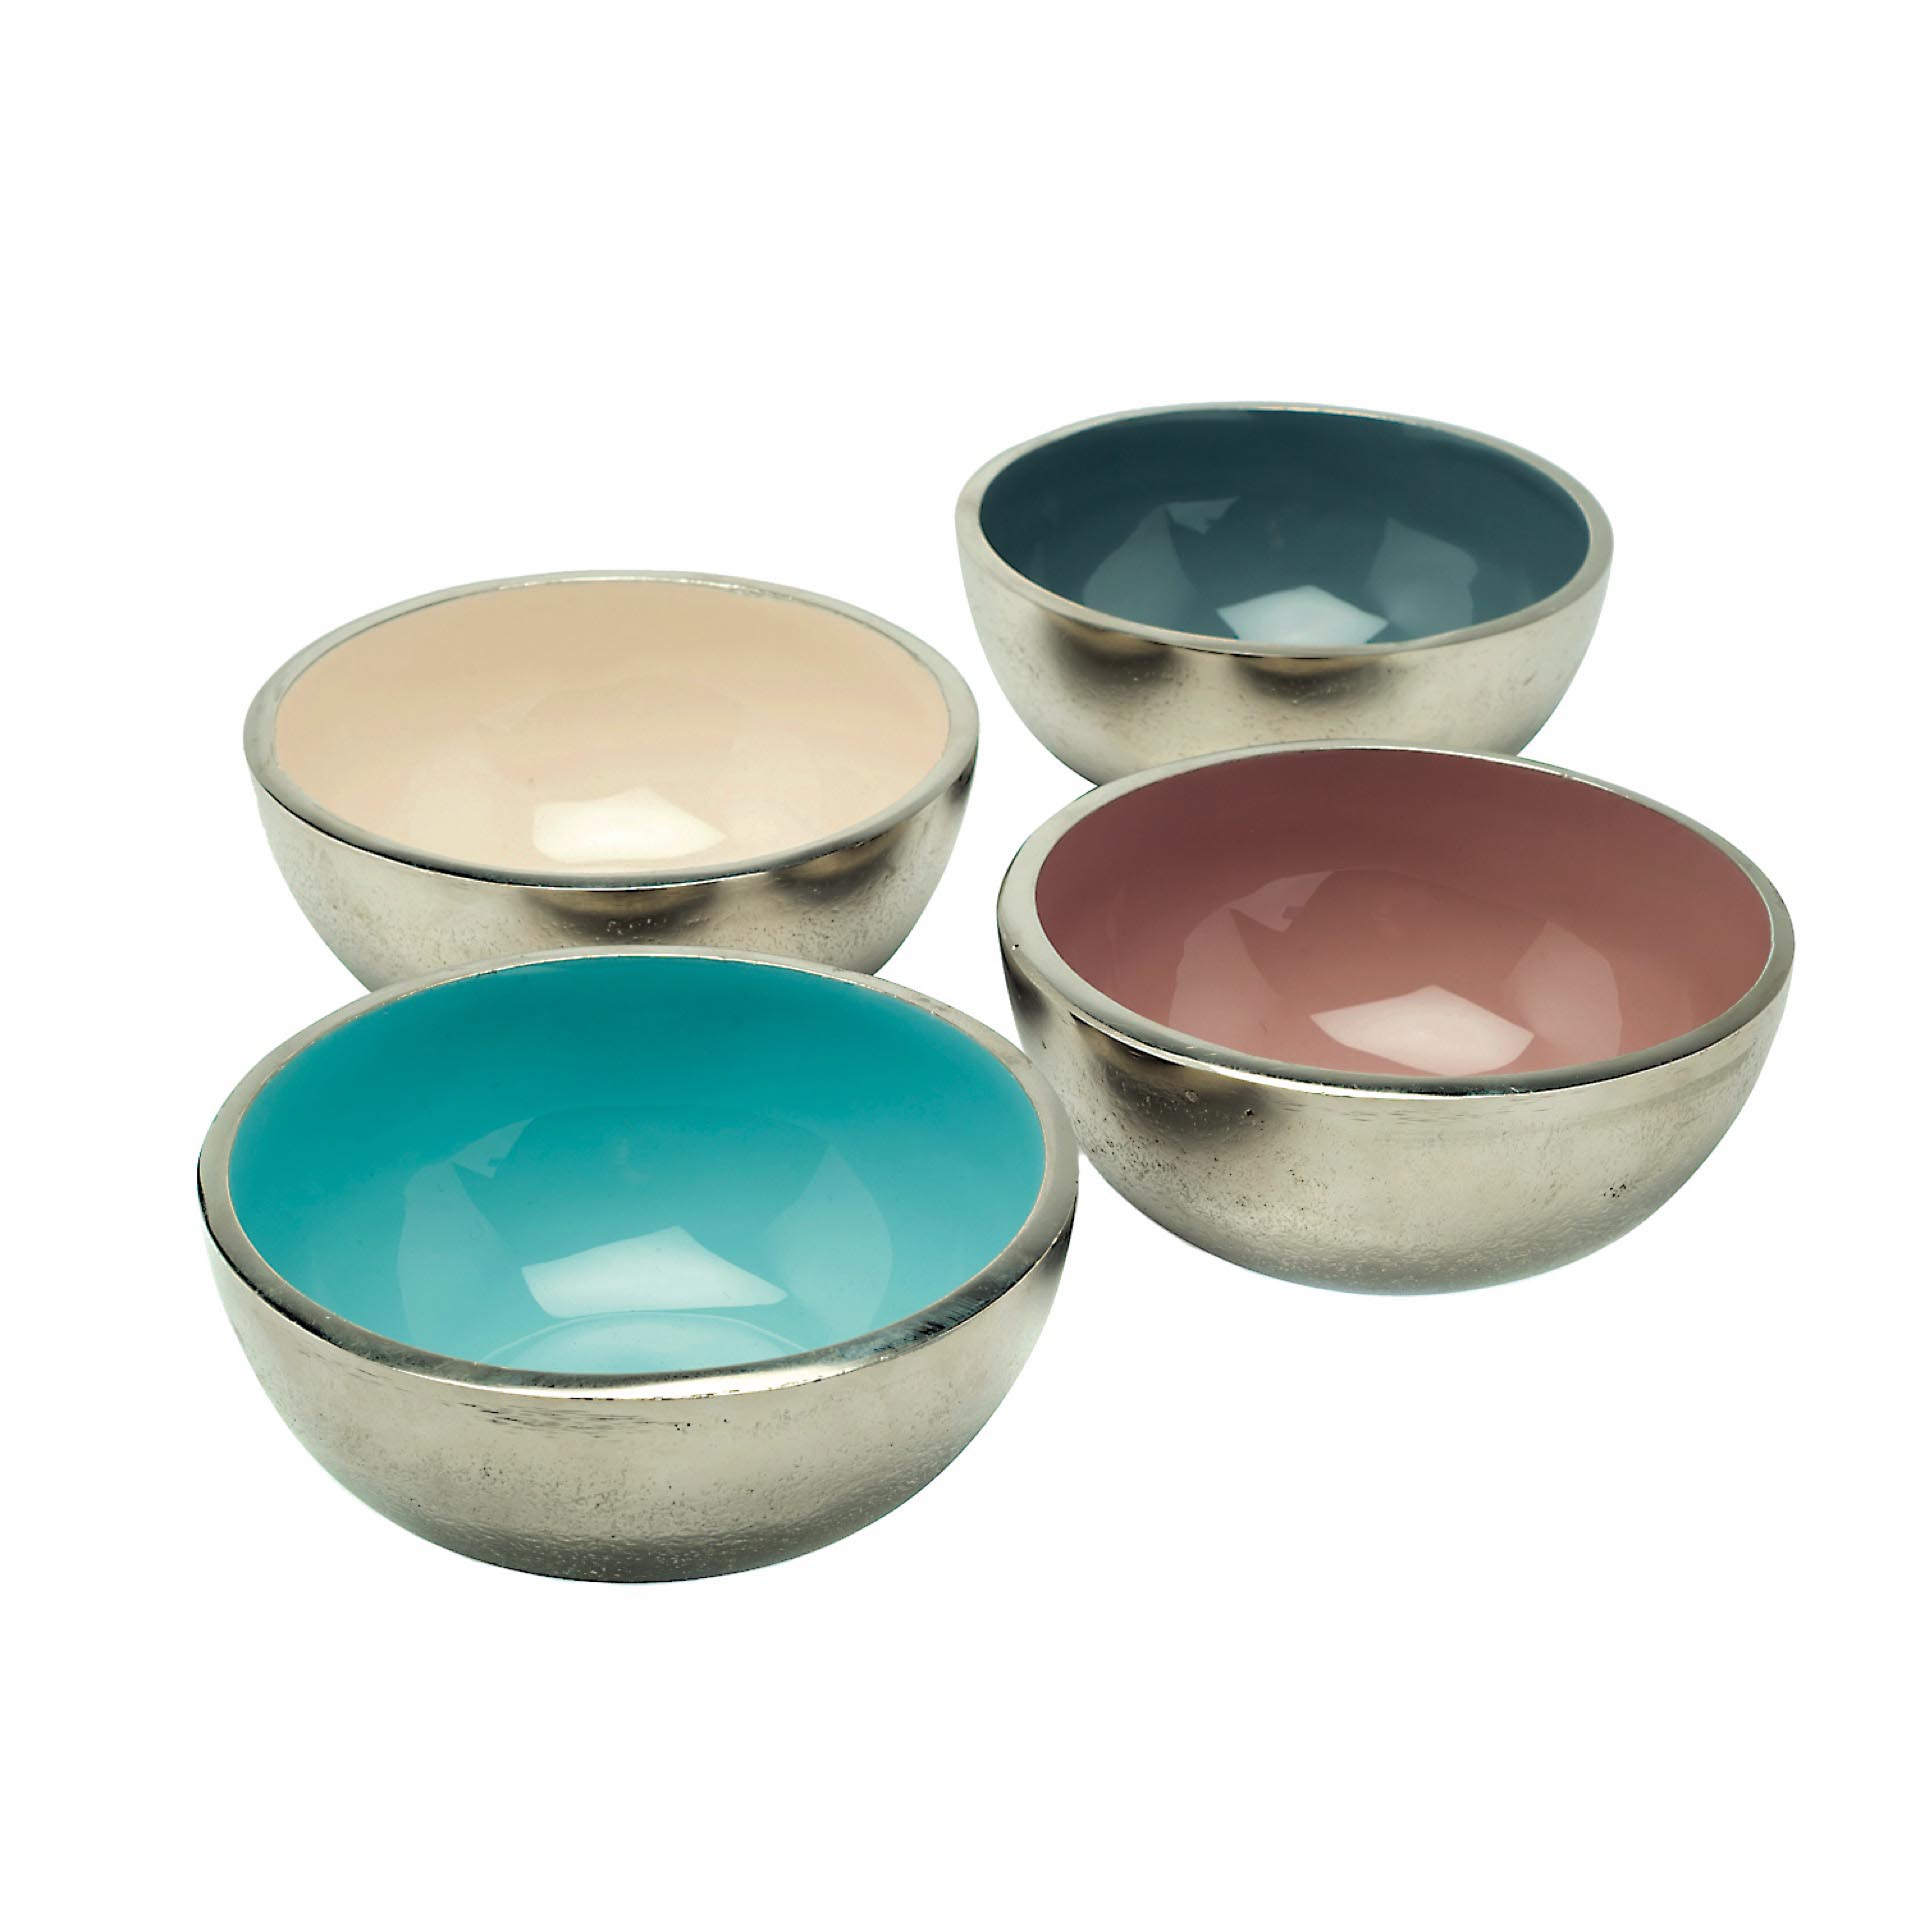 Bowls ($ 180 c/u).